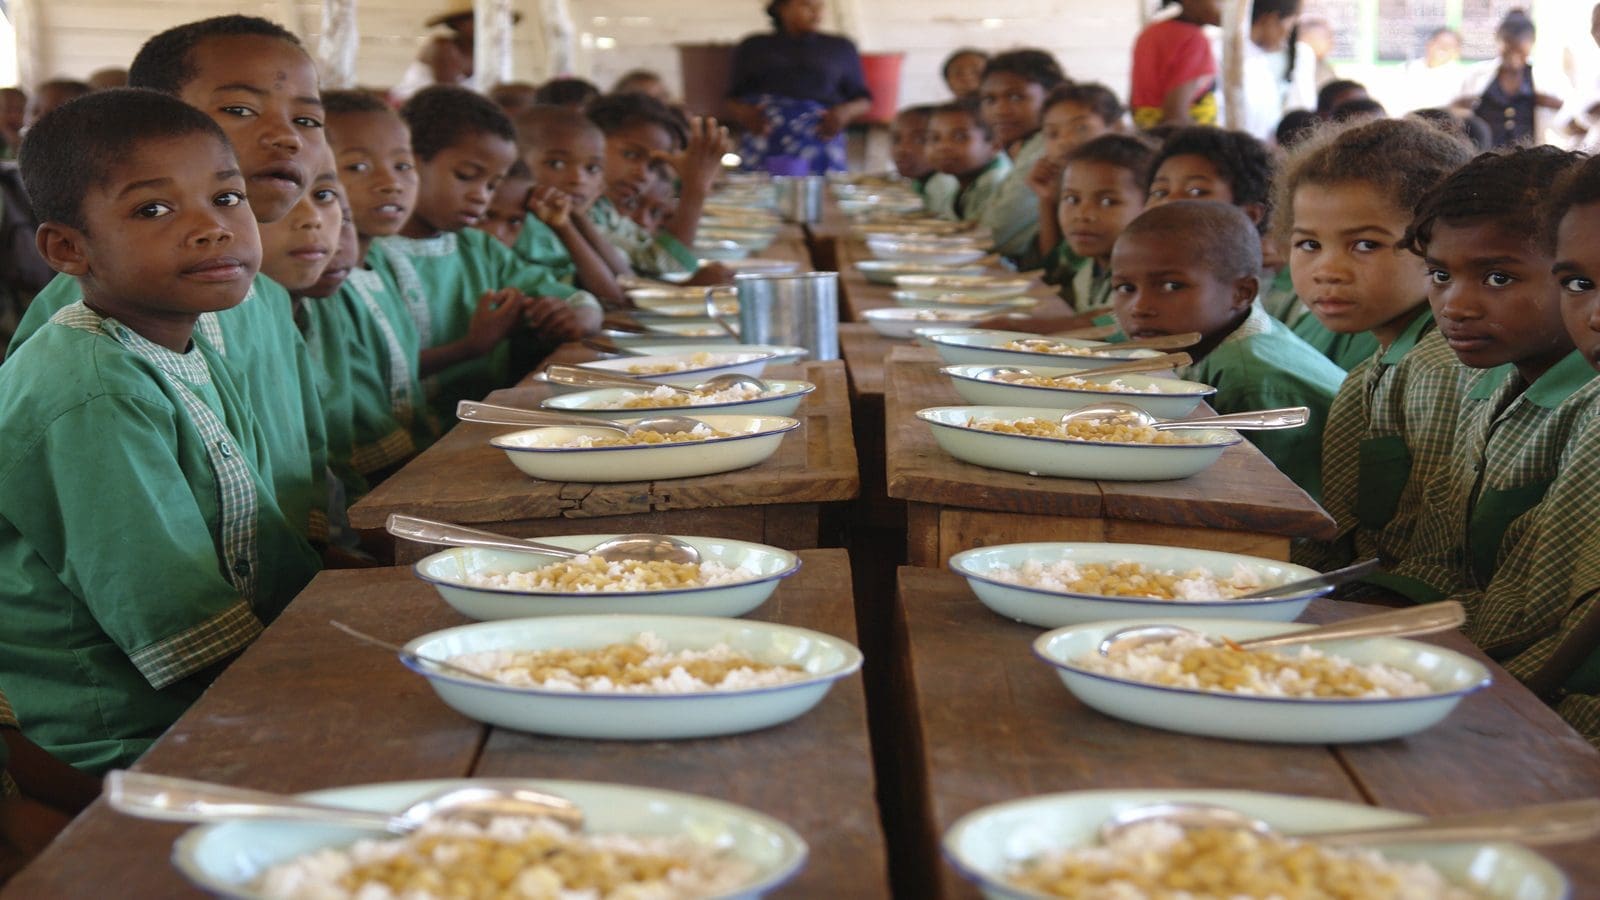 The Rockefeller Foundation donates US$10.7M to support WFP school feeding programs